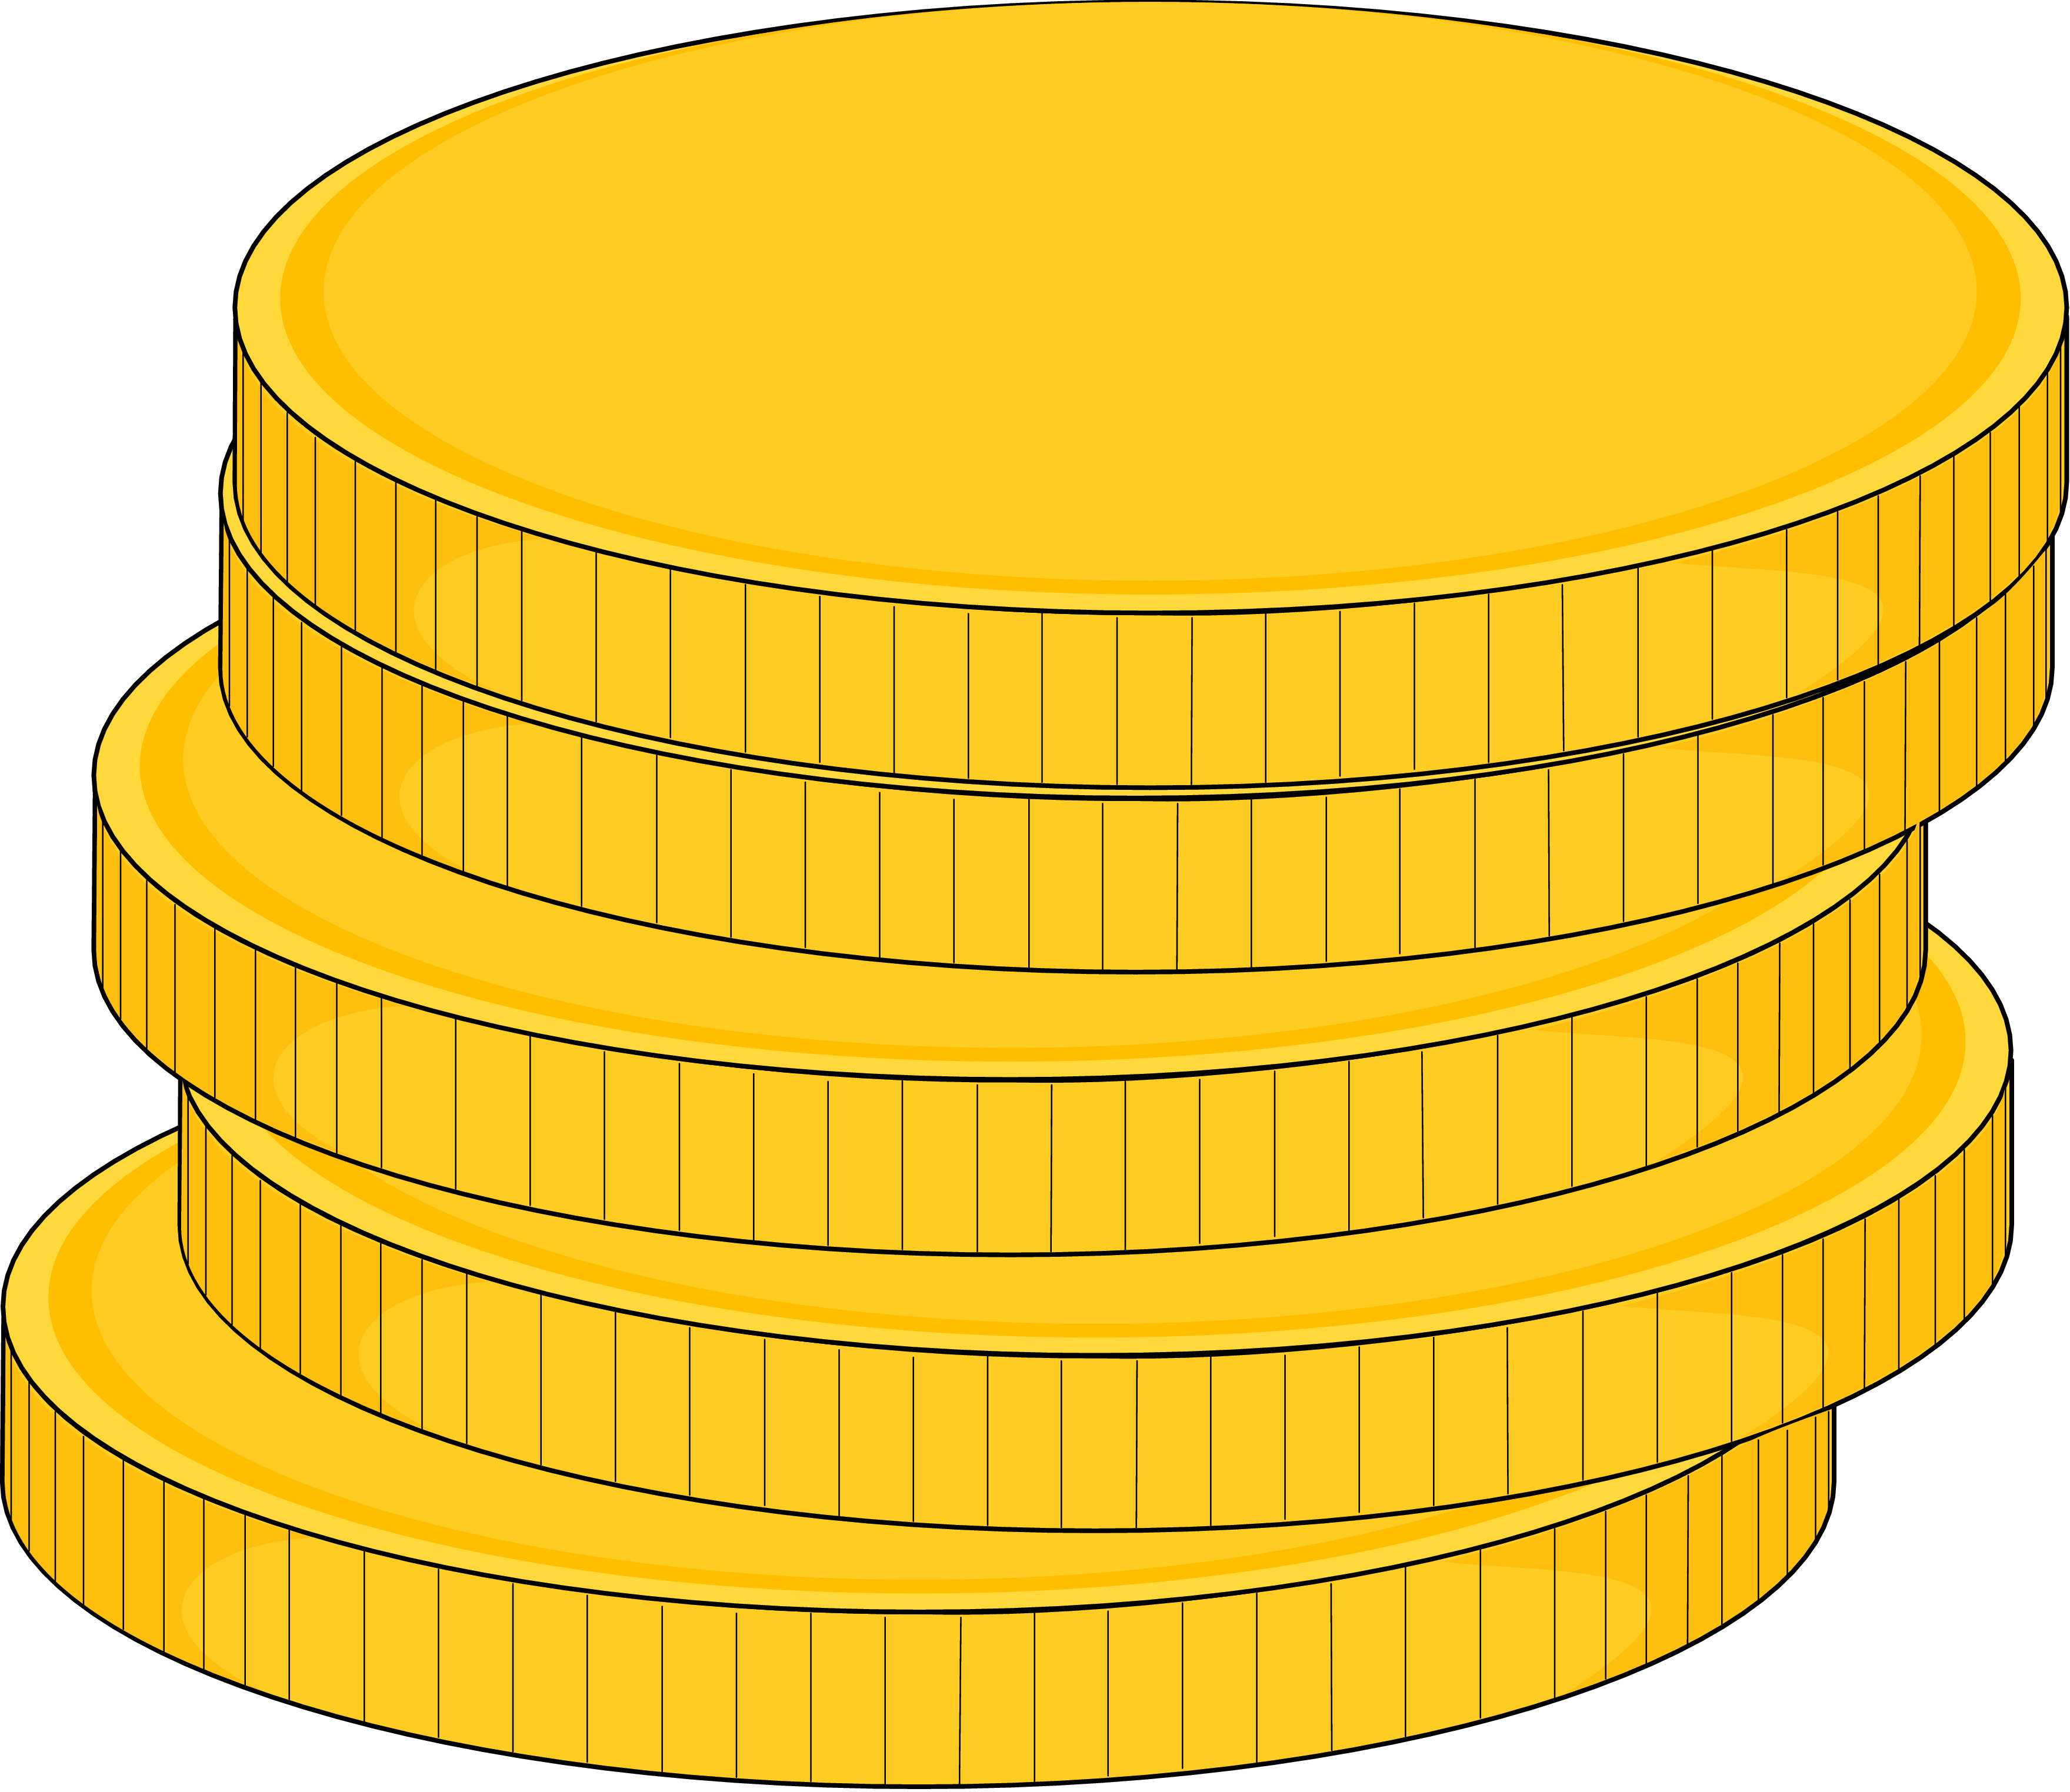 Amount of Monedas